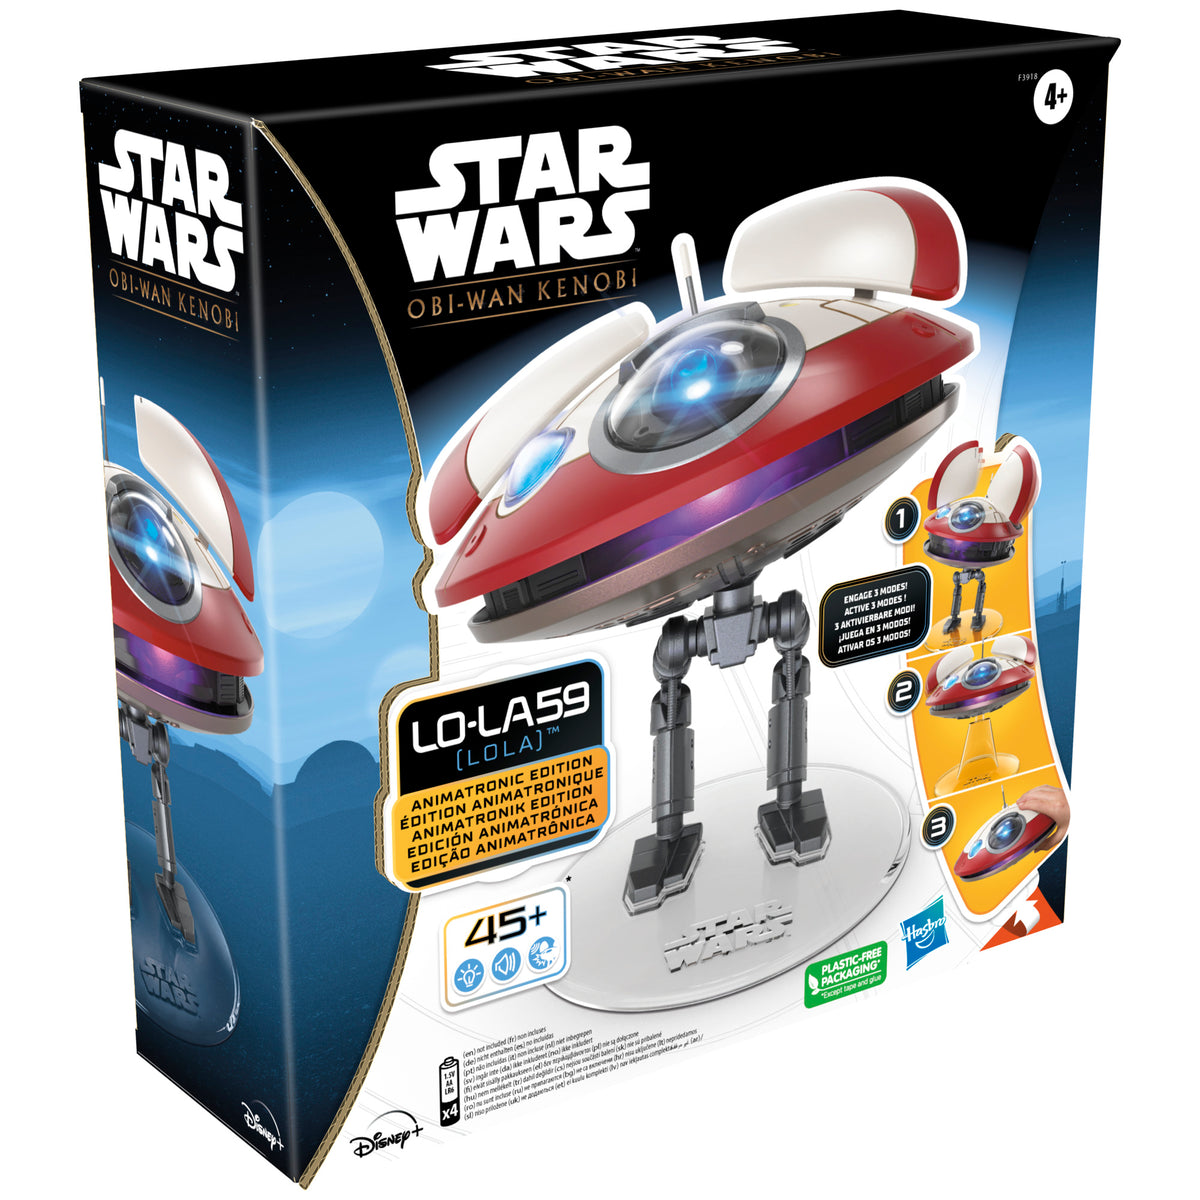 Star Wars L0-LA59 (Lola) Animatronic Edition – Hasbro Pulse